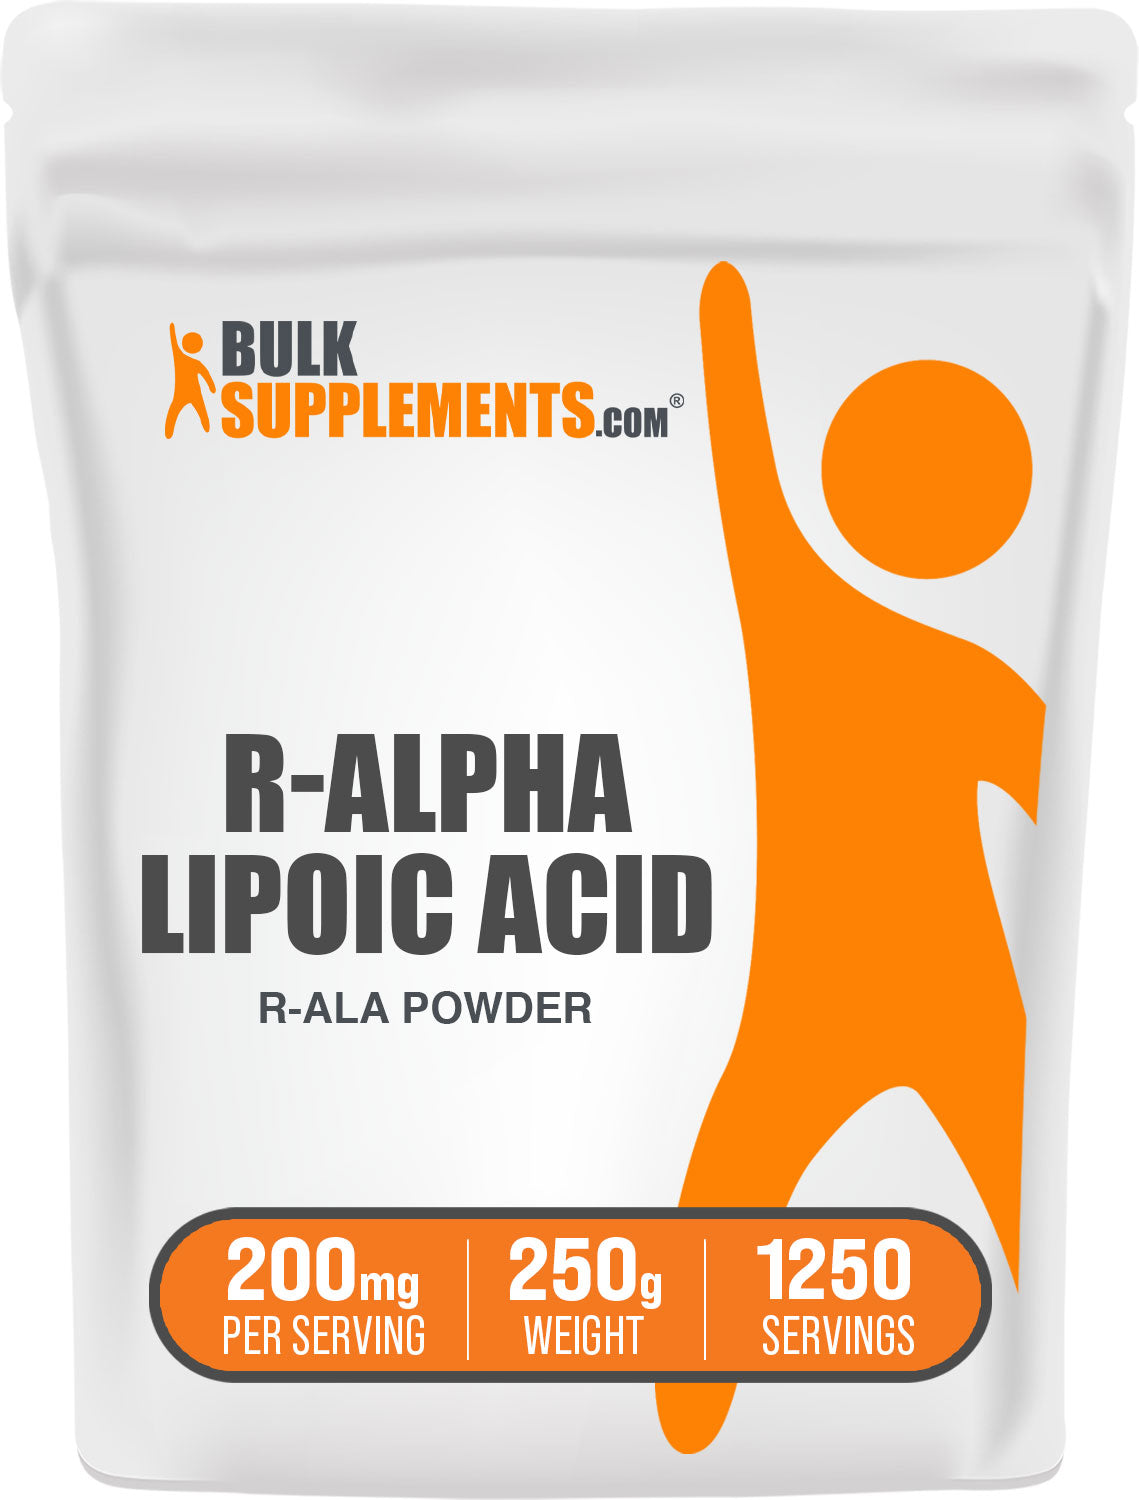 BulkSupplements R-Alpha Lipoic Acid Powder R-ALA 250g bag